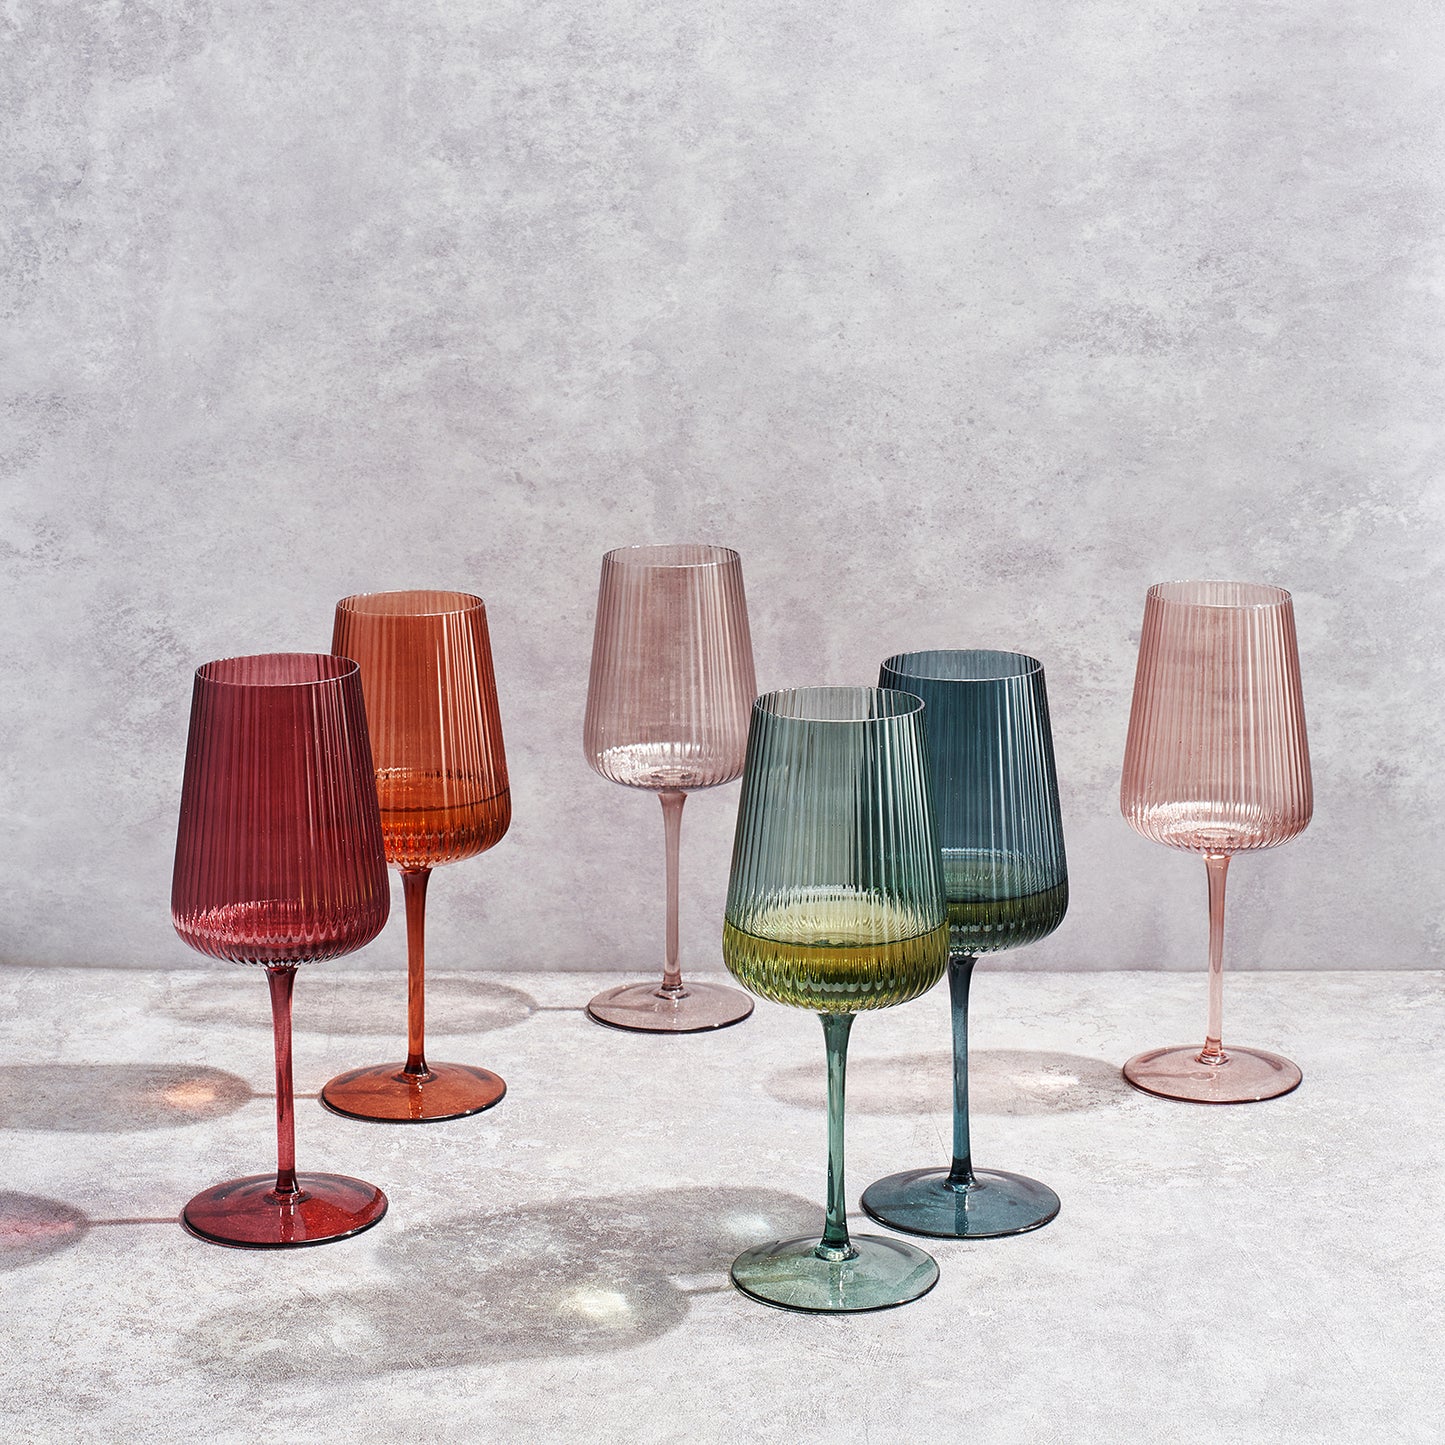 Tonal Ribbed Wine Glassware, Set of 6